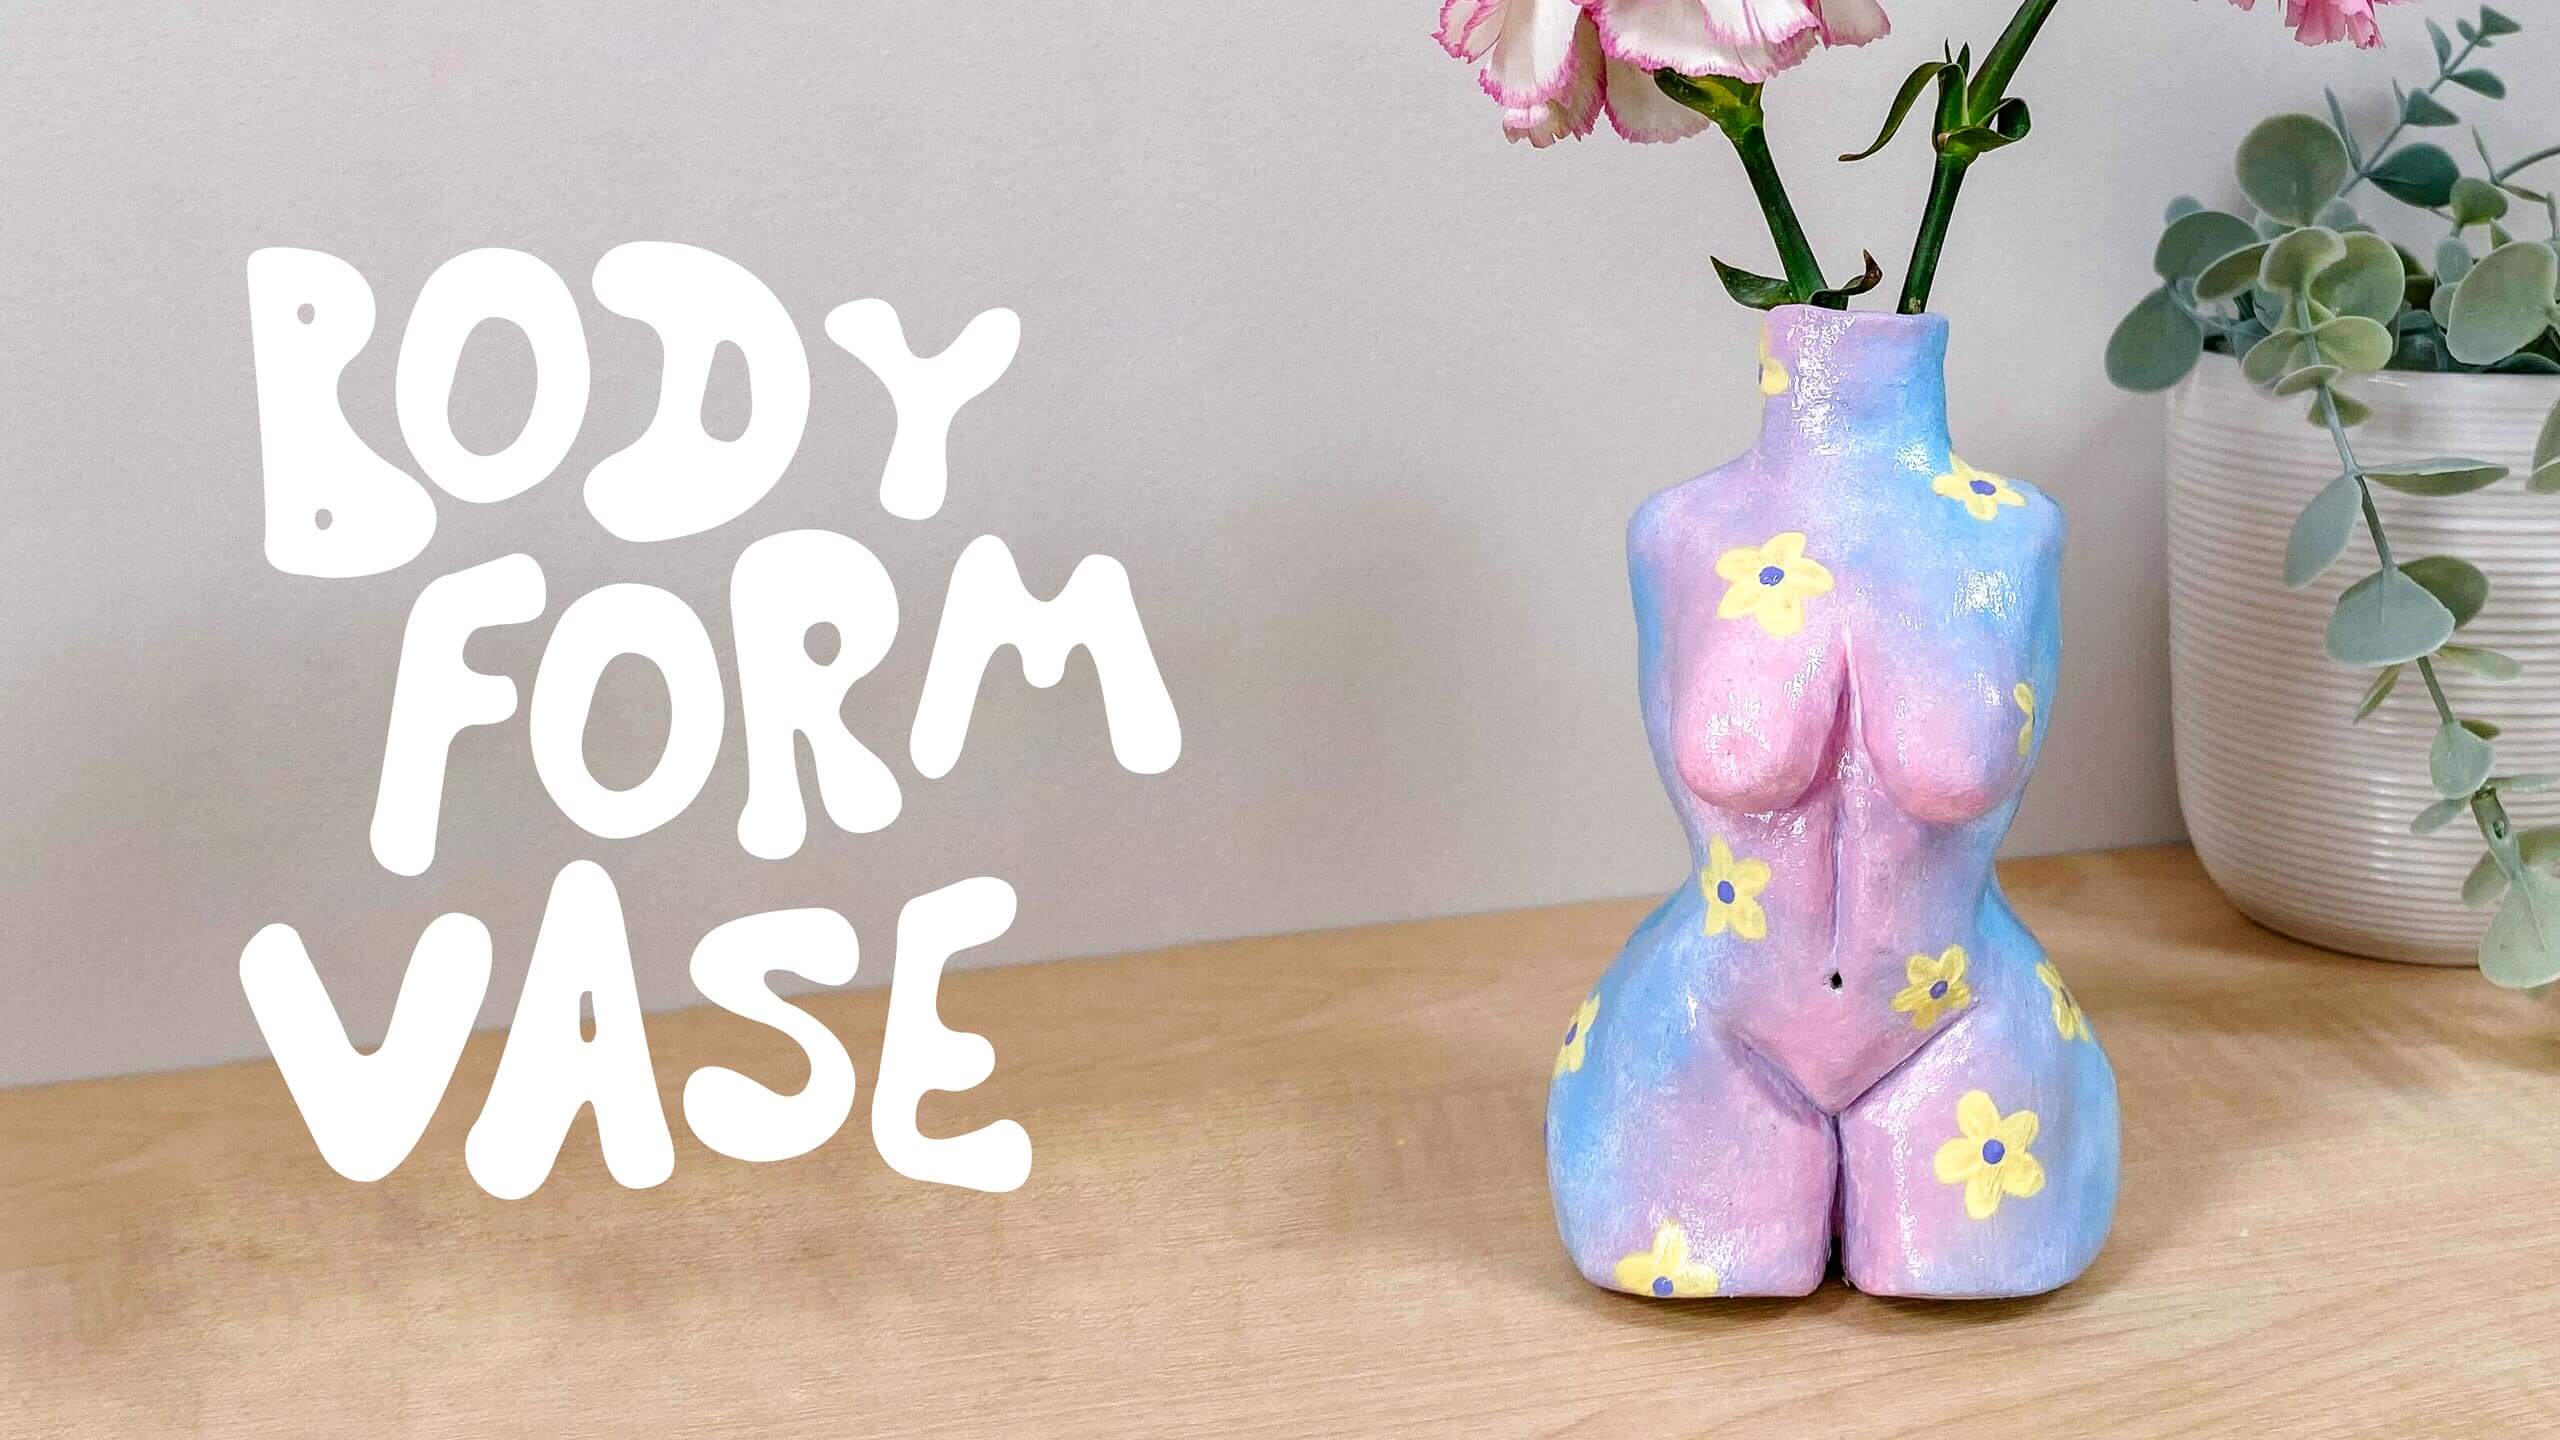 You Grow Girl! 💖💙 DIY Home Pottery Body Vase